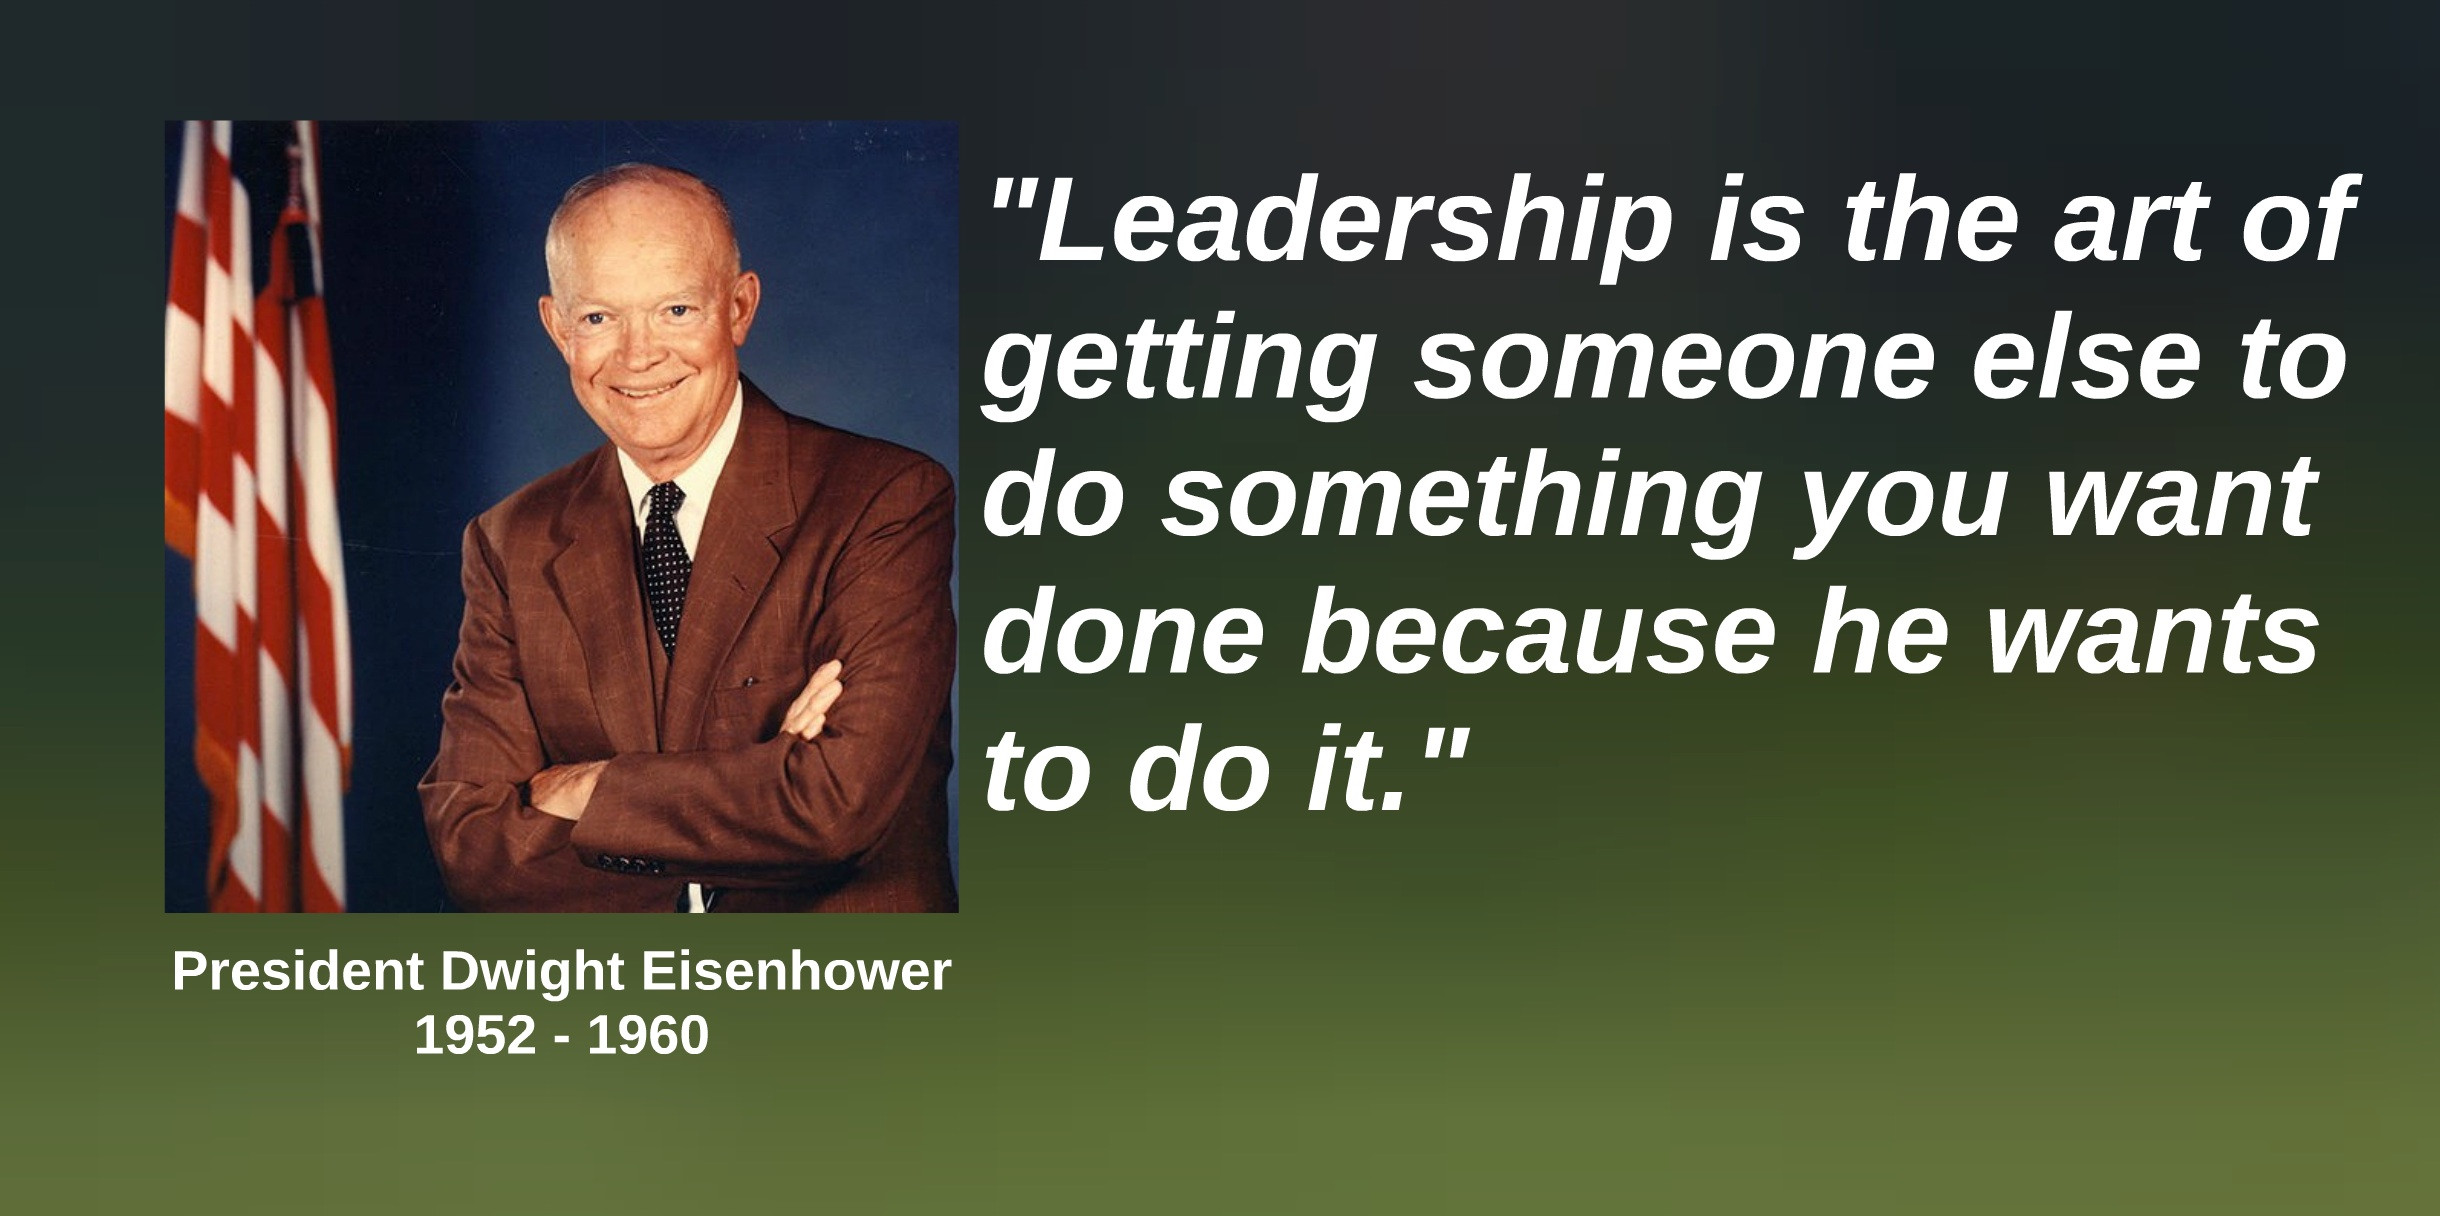 Eisenhower Leadership Quote
 Russo Capitol Strategies